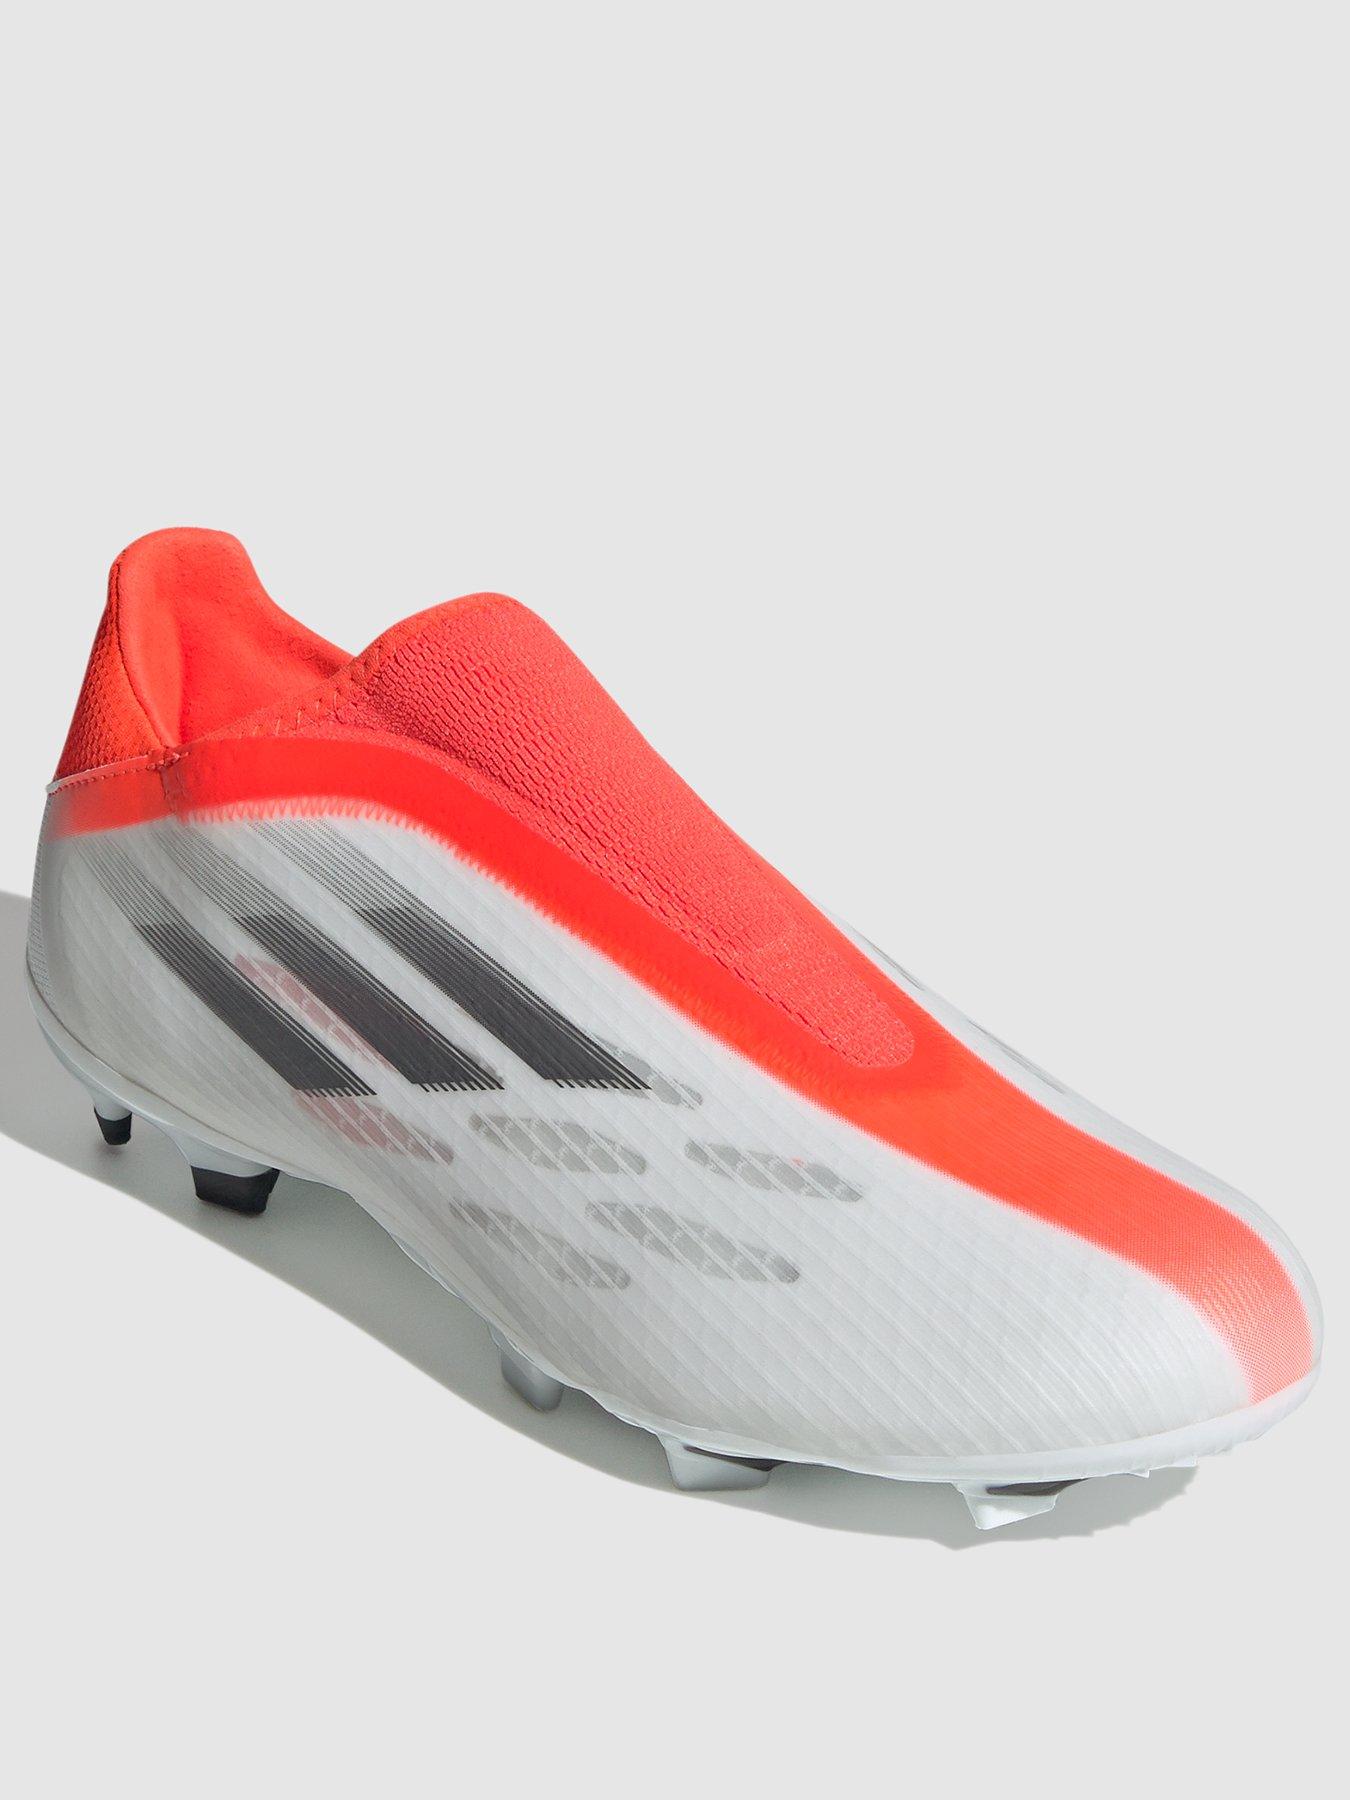 Football Boots | Nike, Adidas \u0026 More 